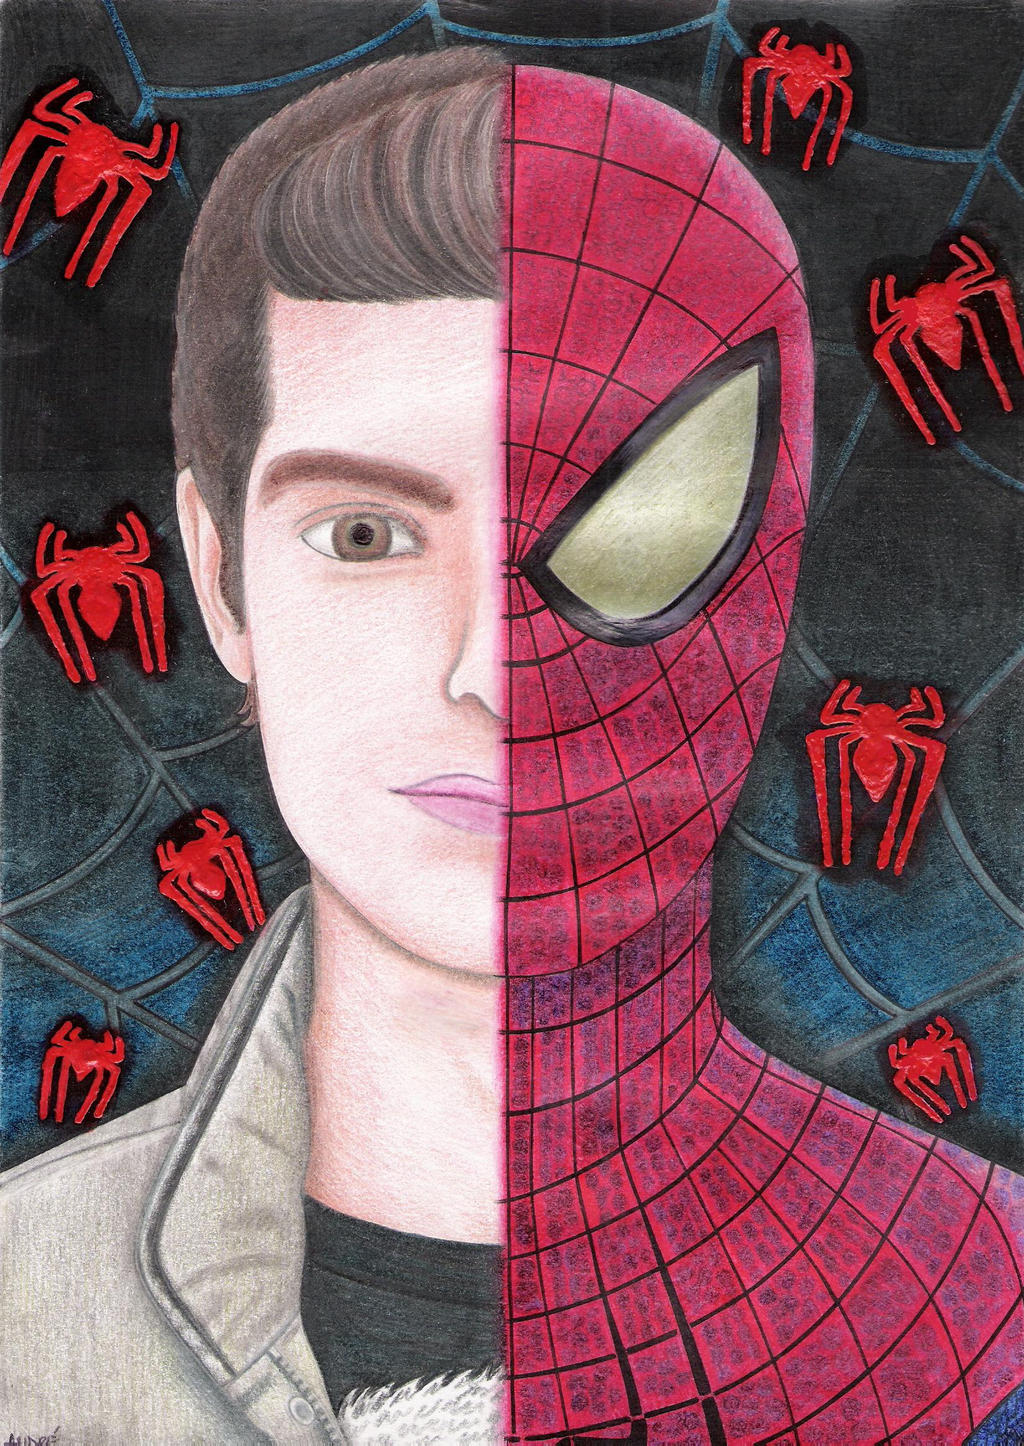 Spider-Man drawing - 2012 by andrecamilo20 on DeviantArt